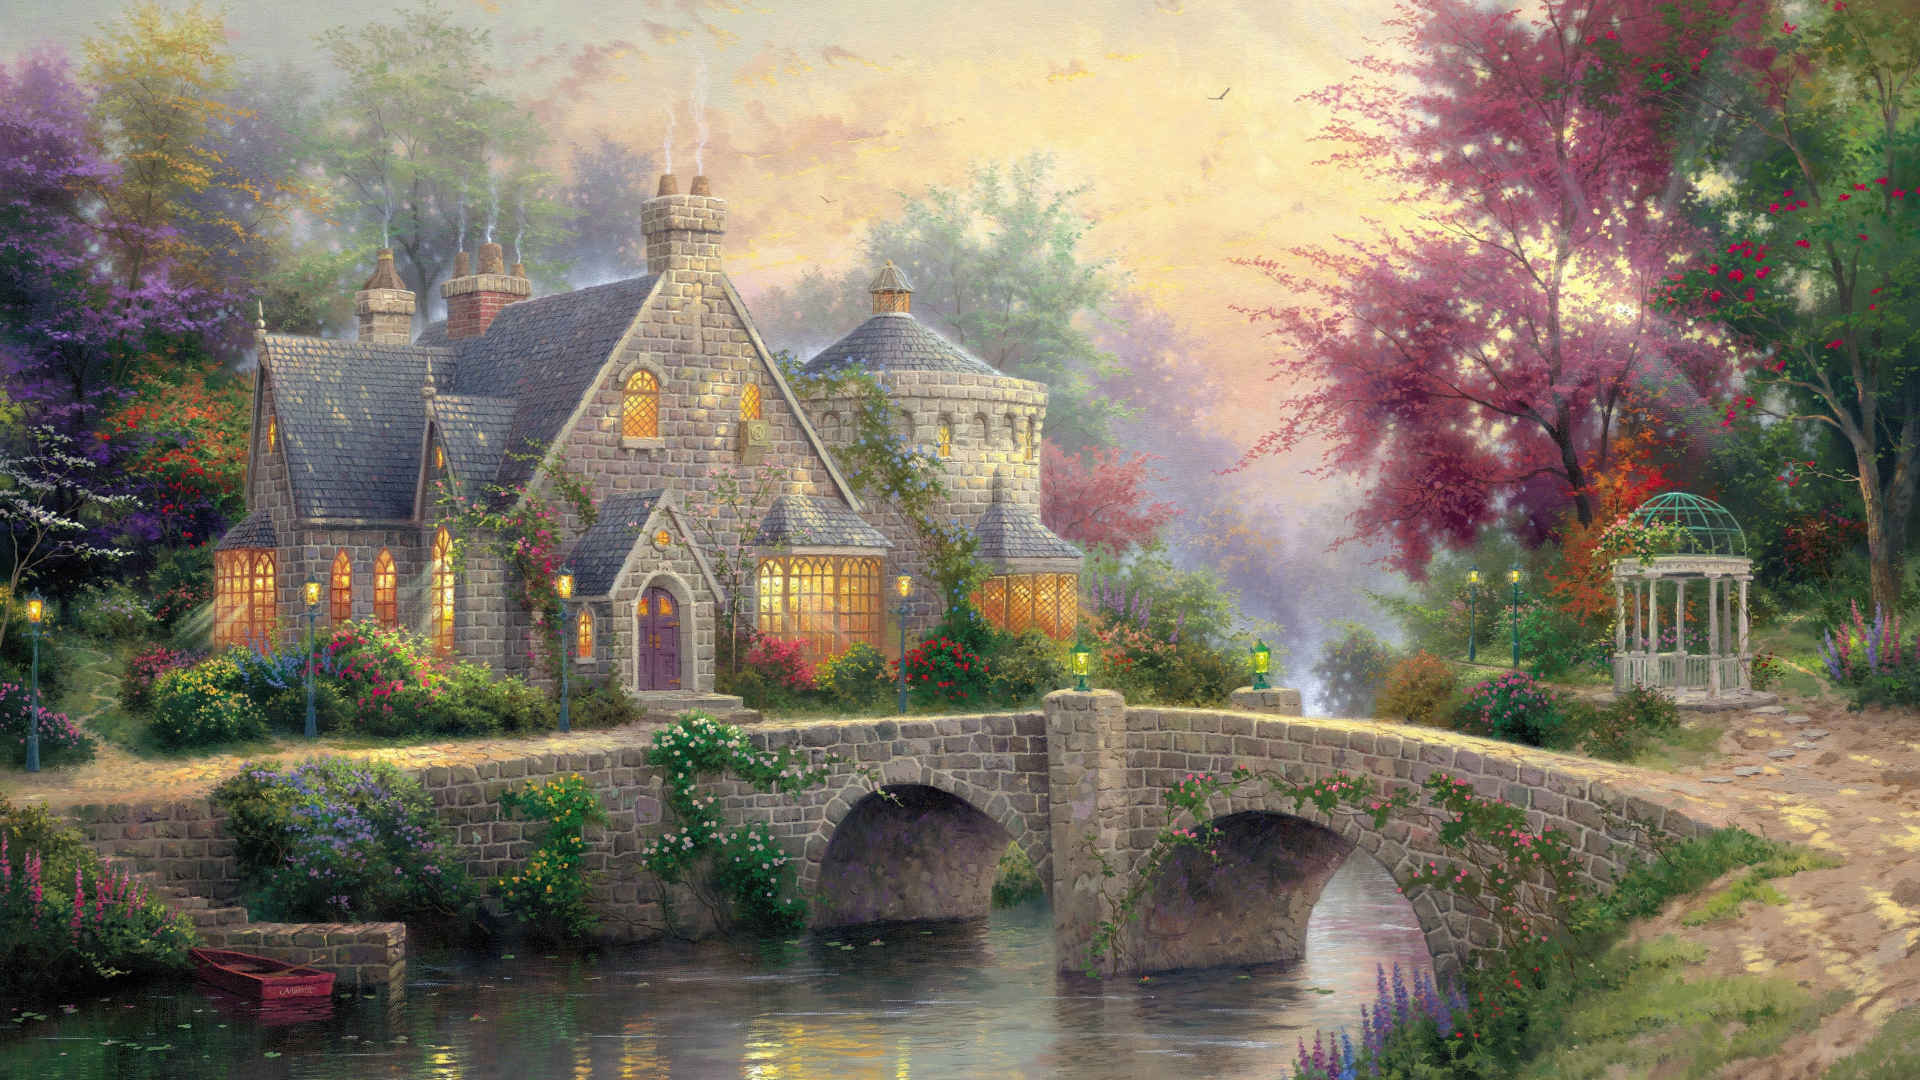 art, manor, lamps, thomas kinkade, bridge, painting, cottage, Lamplight manor, river, colorful